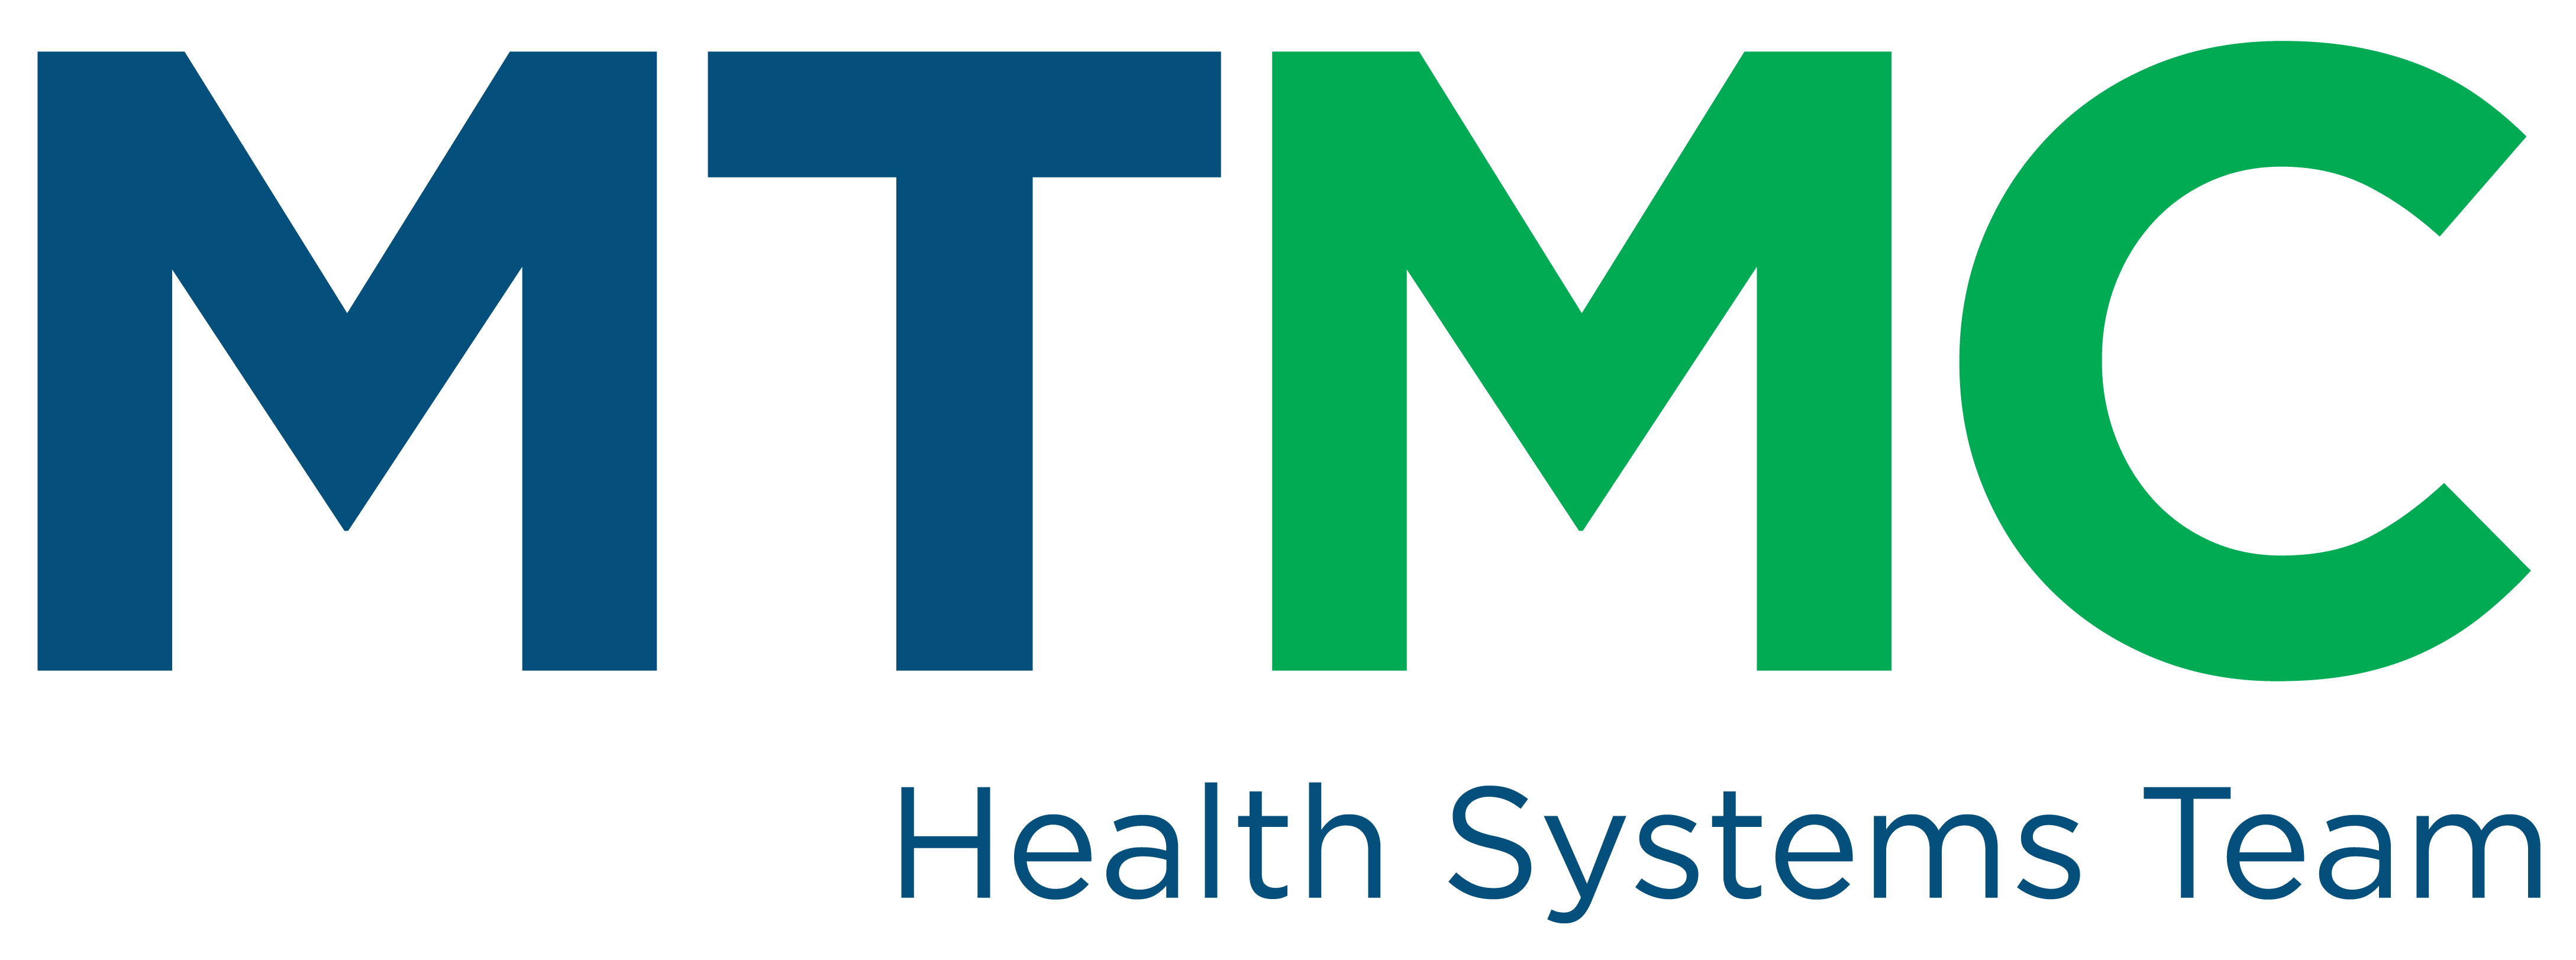 MTMC Health Systems Team Logo